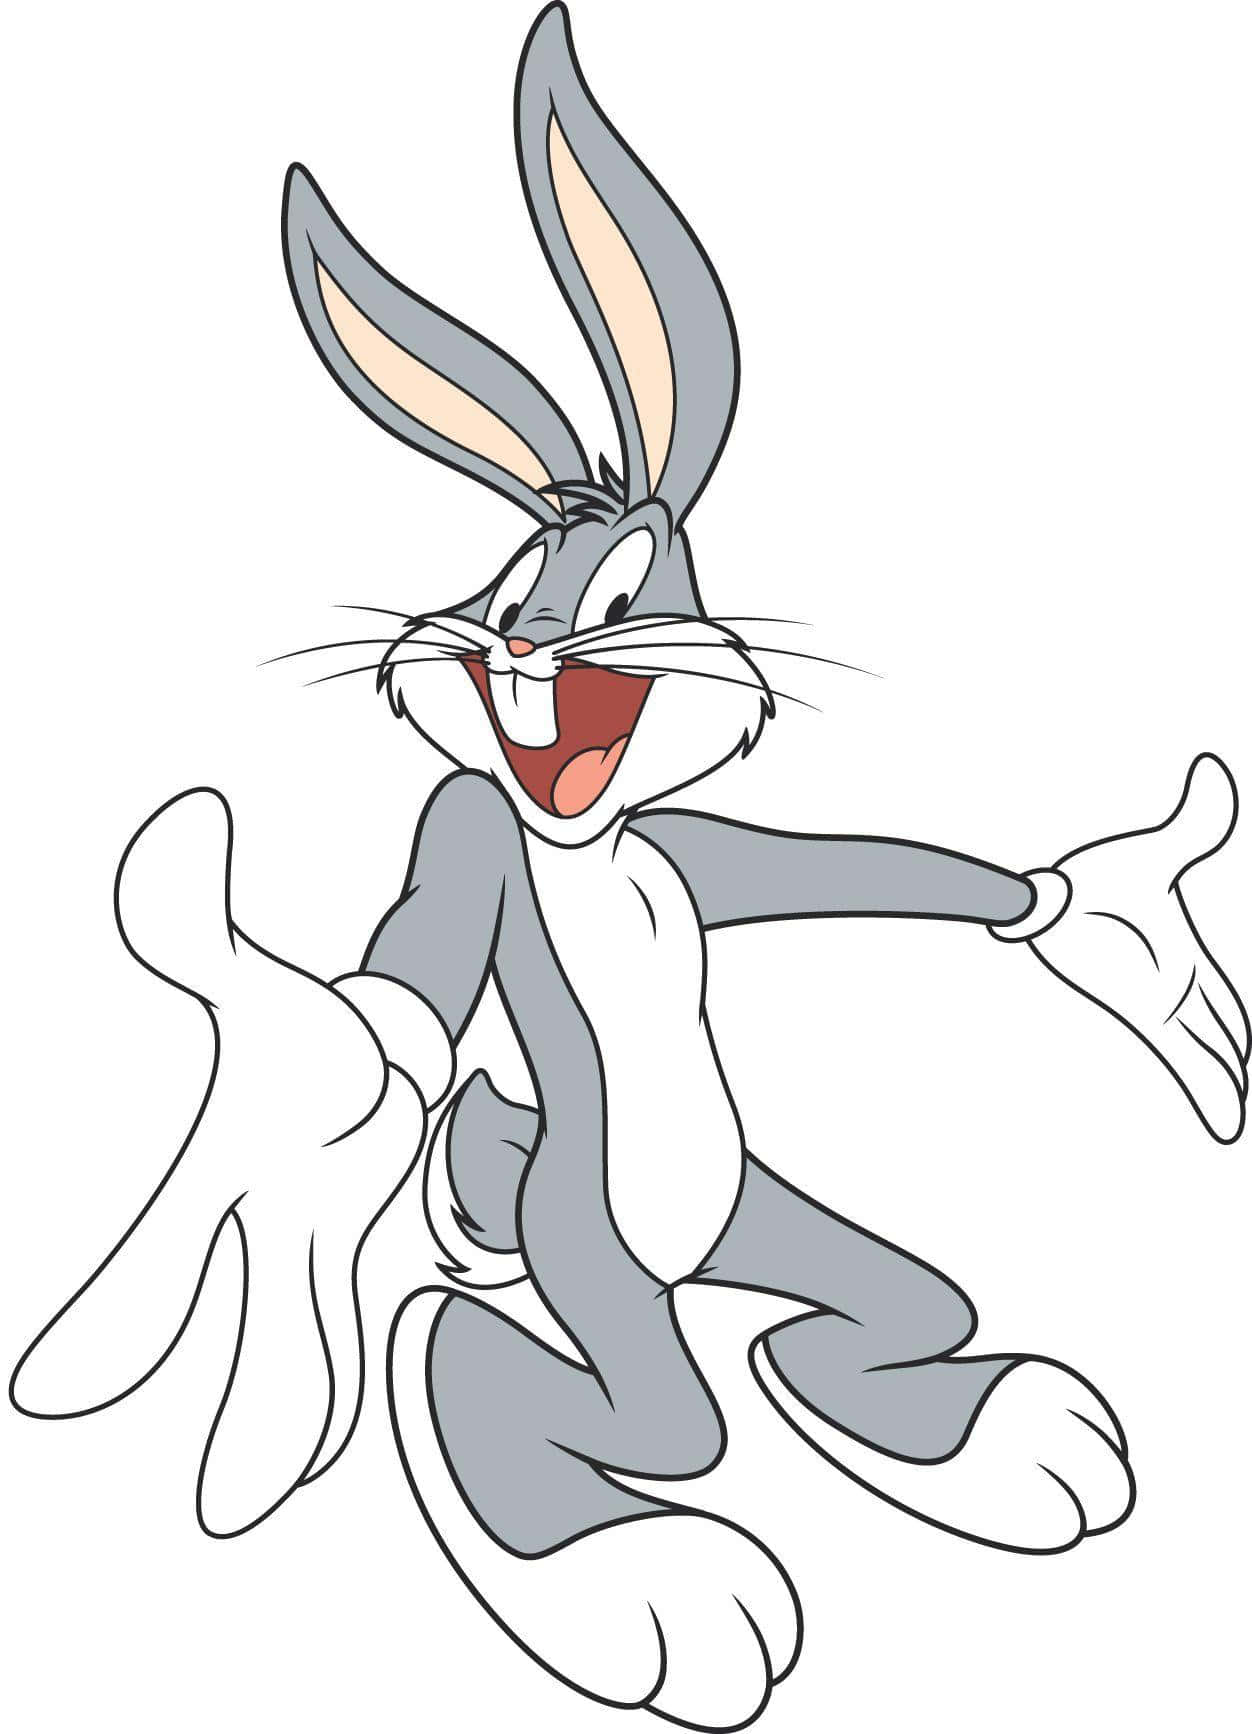 Everyone's Favorite Rabbit, Bugs Bunny